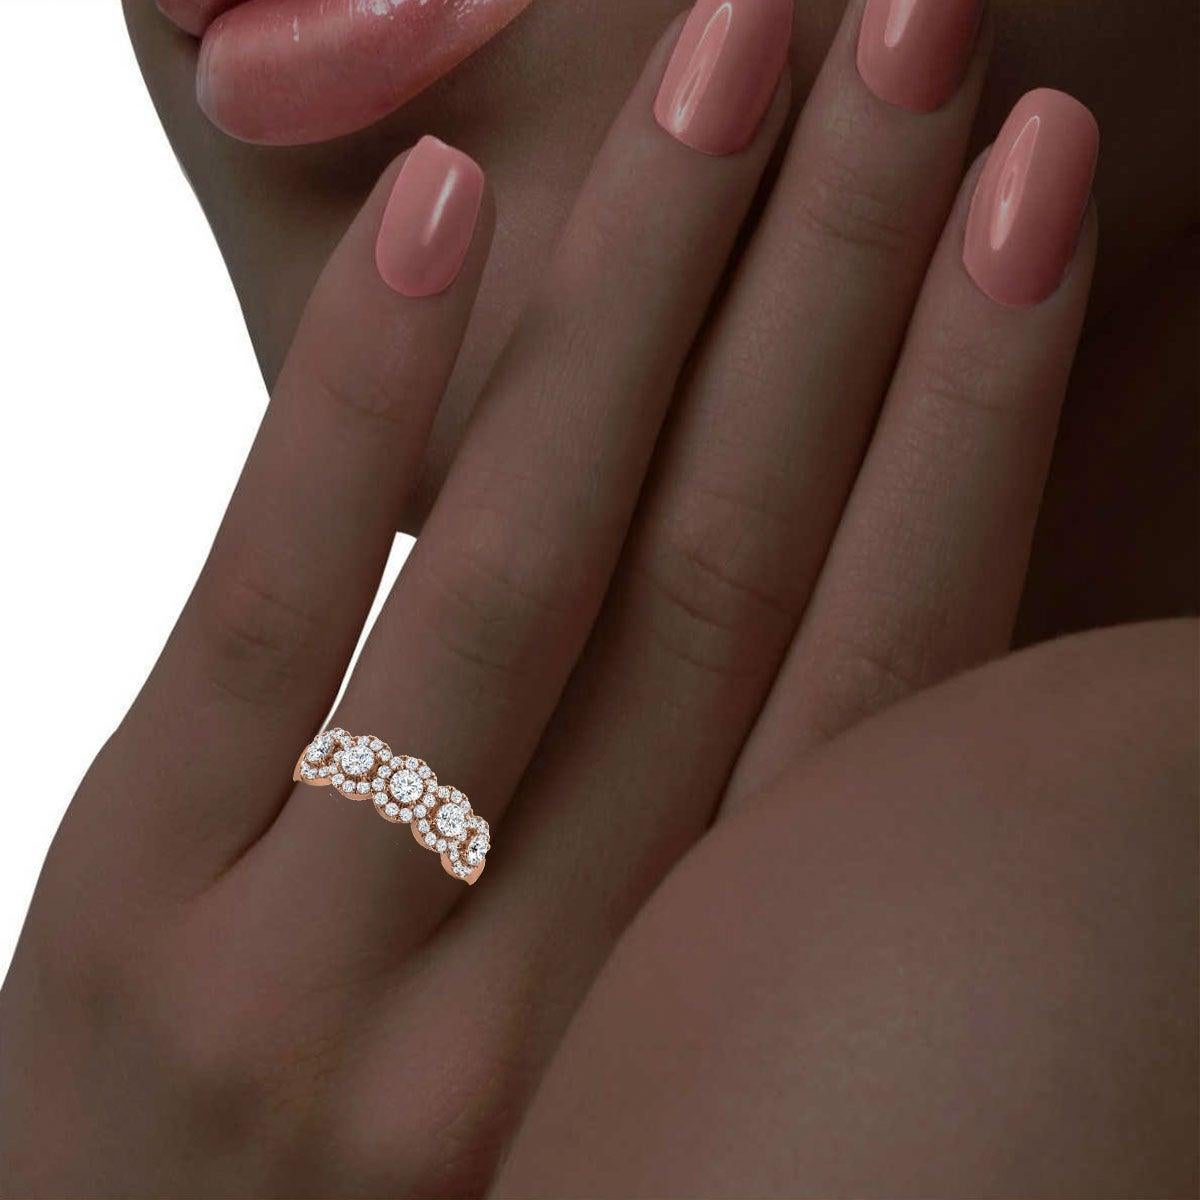 For Sale:  14k Rose Gold Petite Jenna Halo Diamond Ring '1/2 Ct. Tw' 4